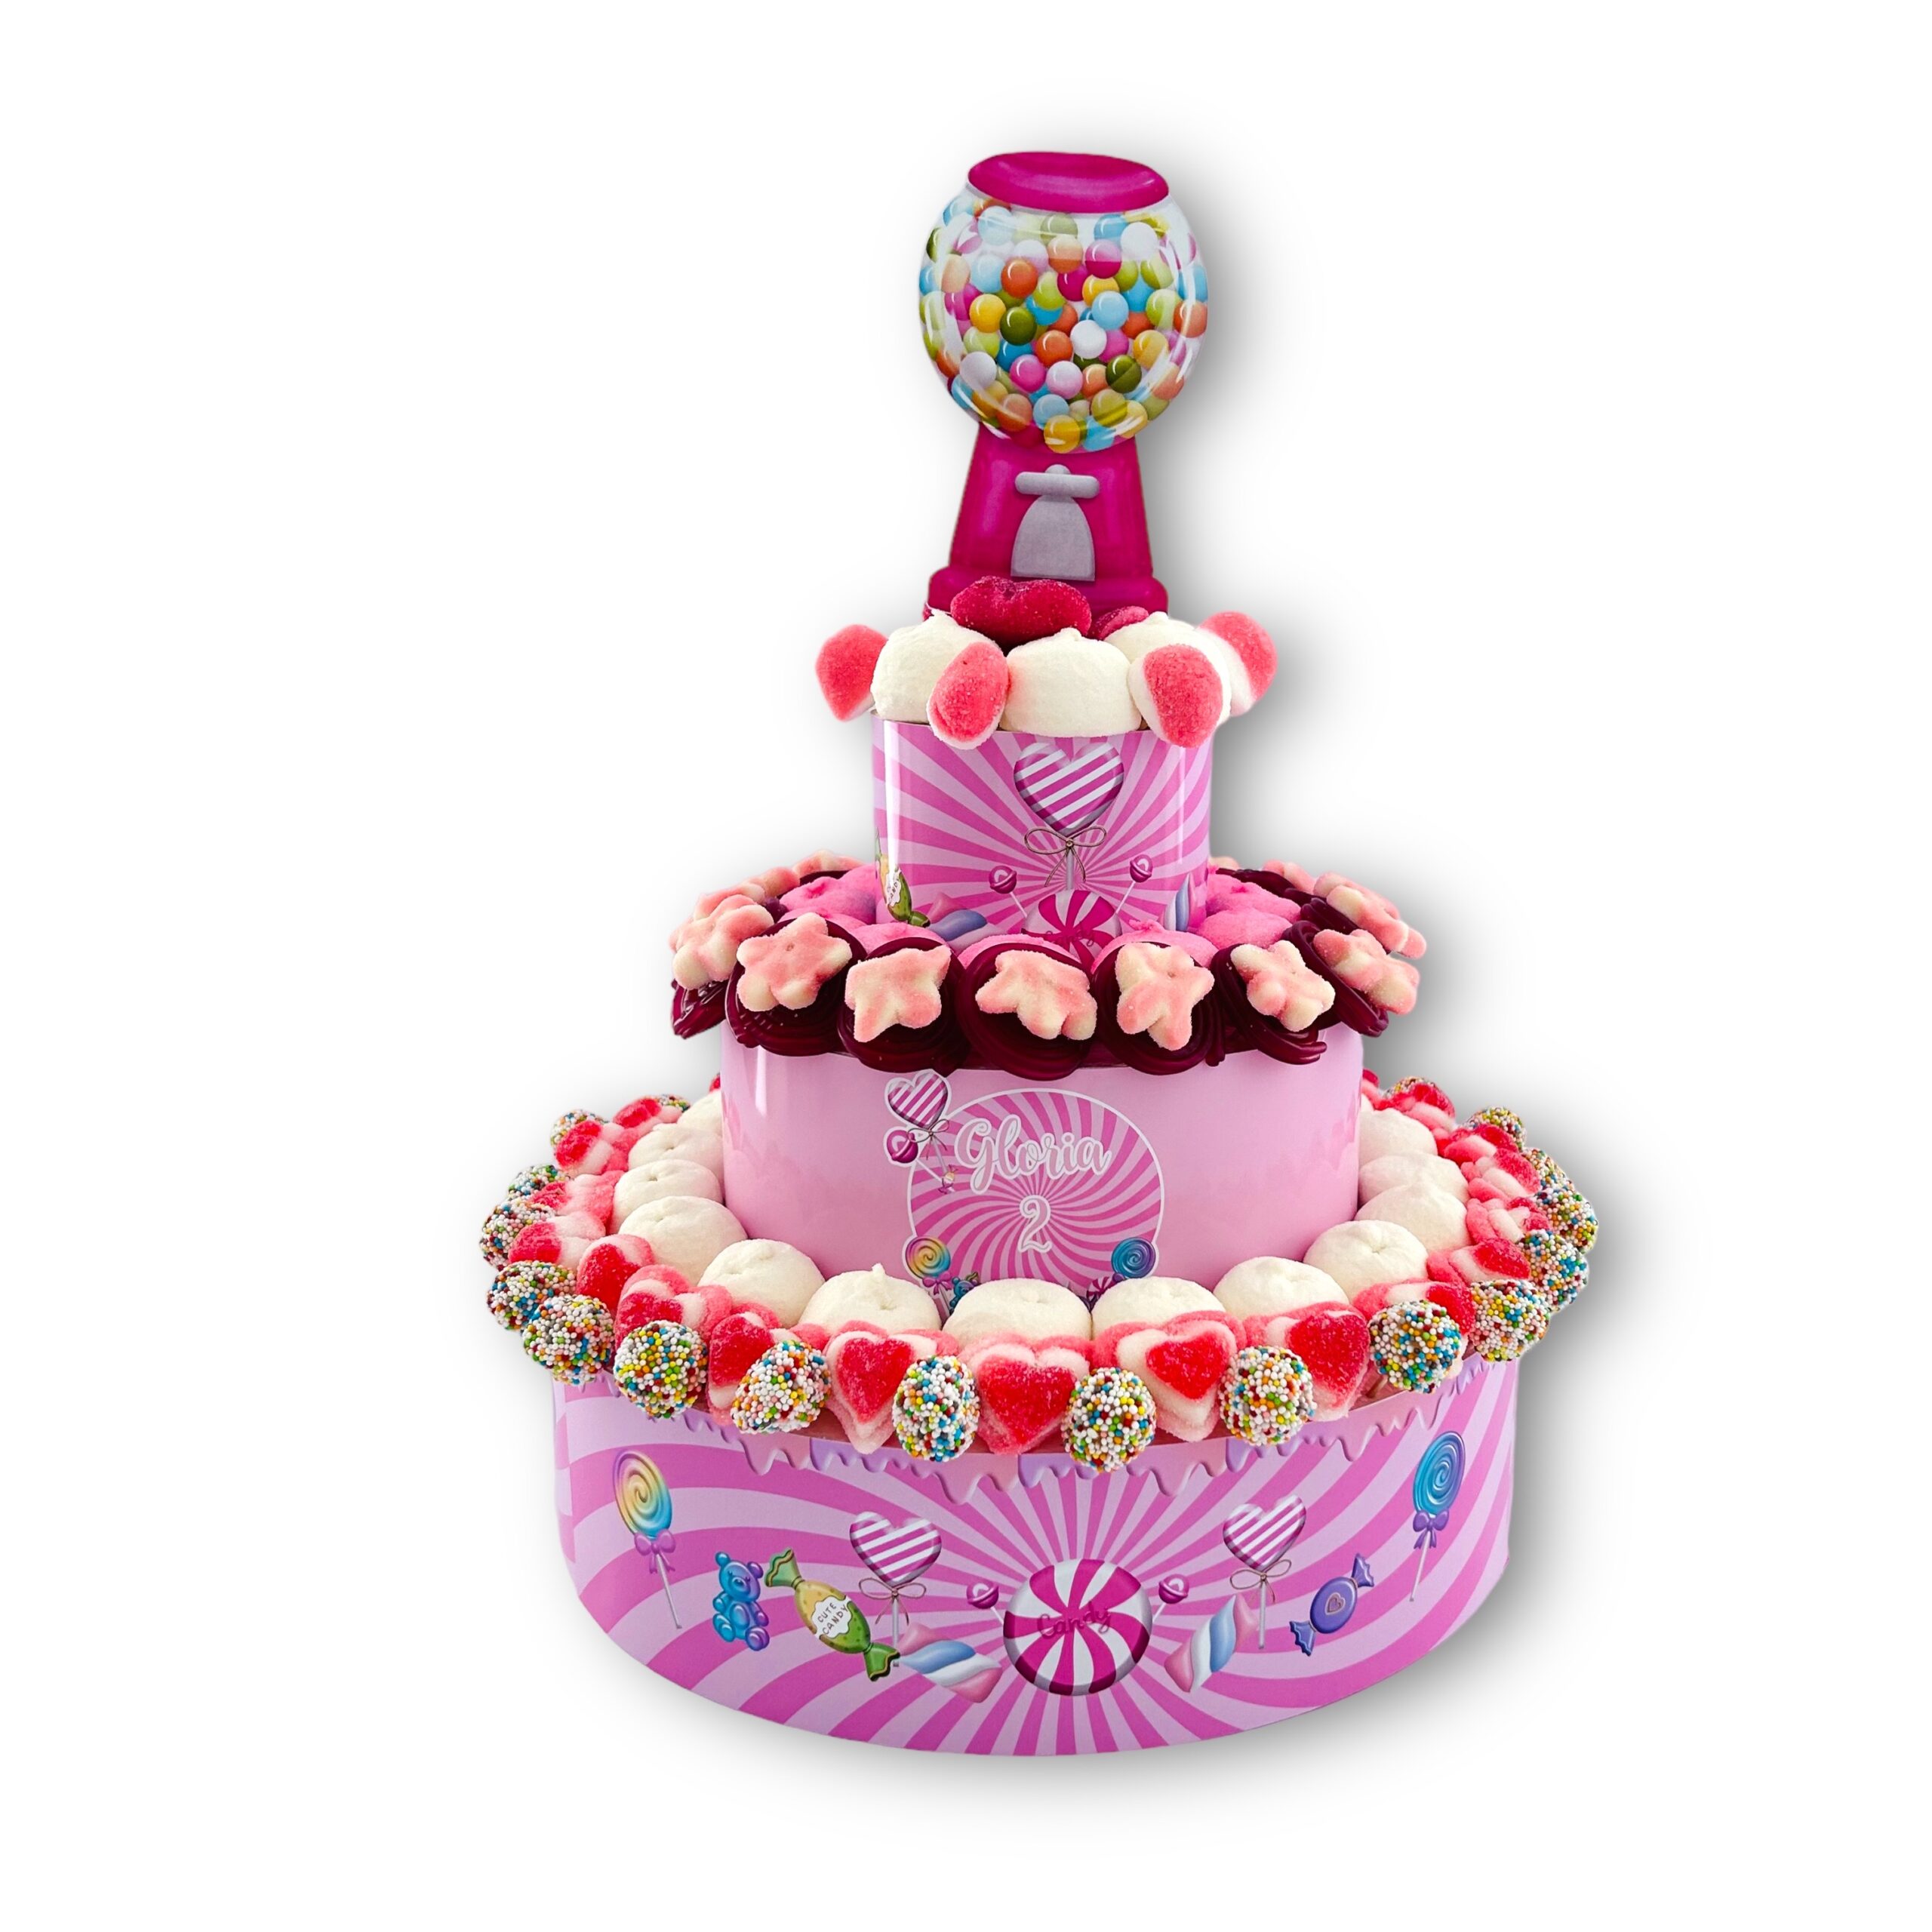 Torta Candyland 3 Piani